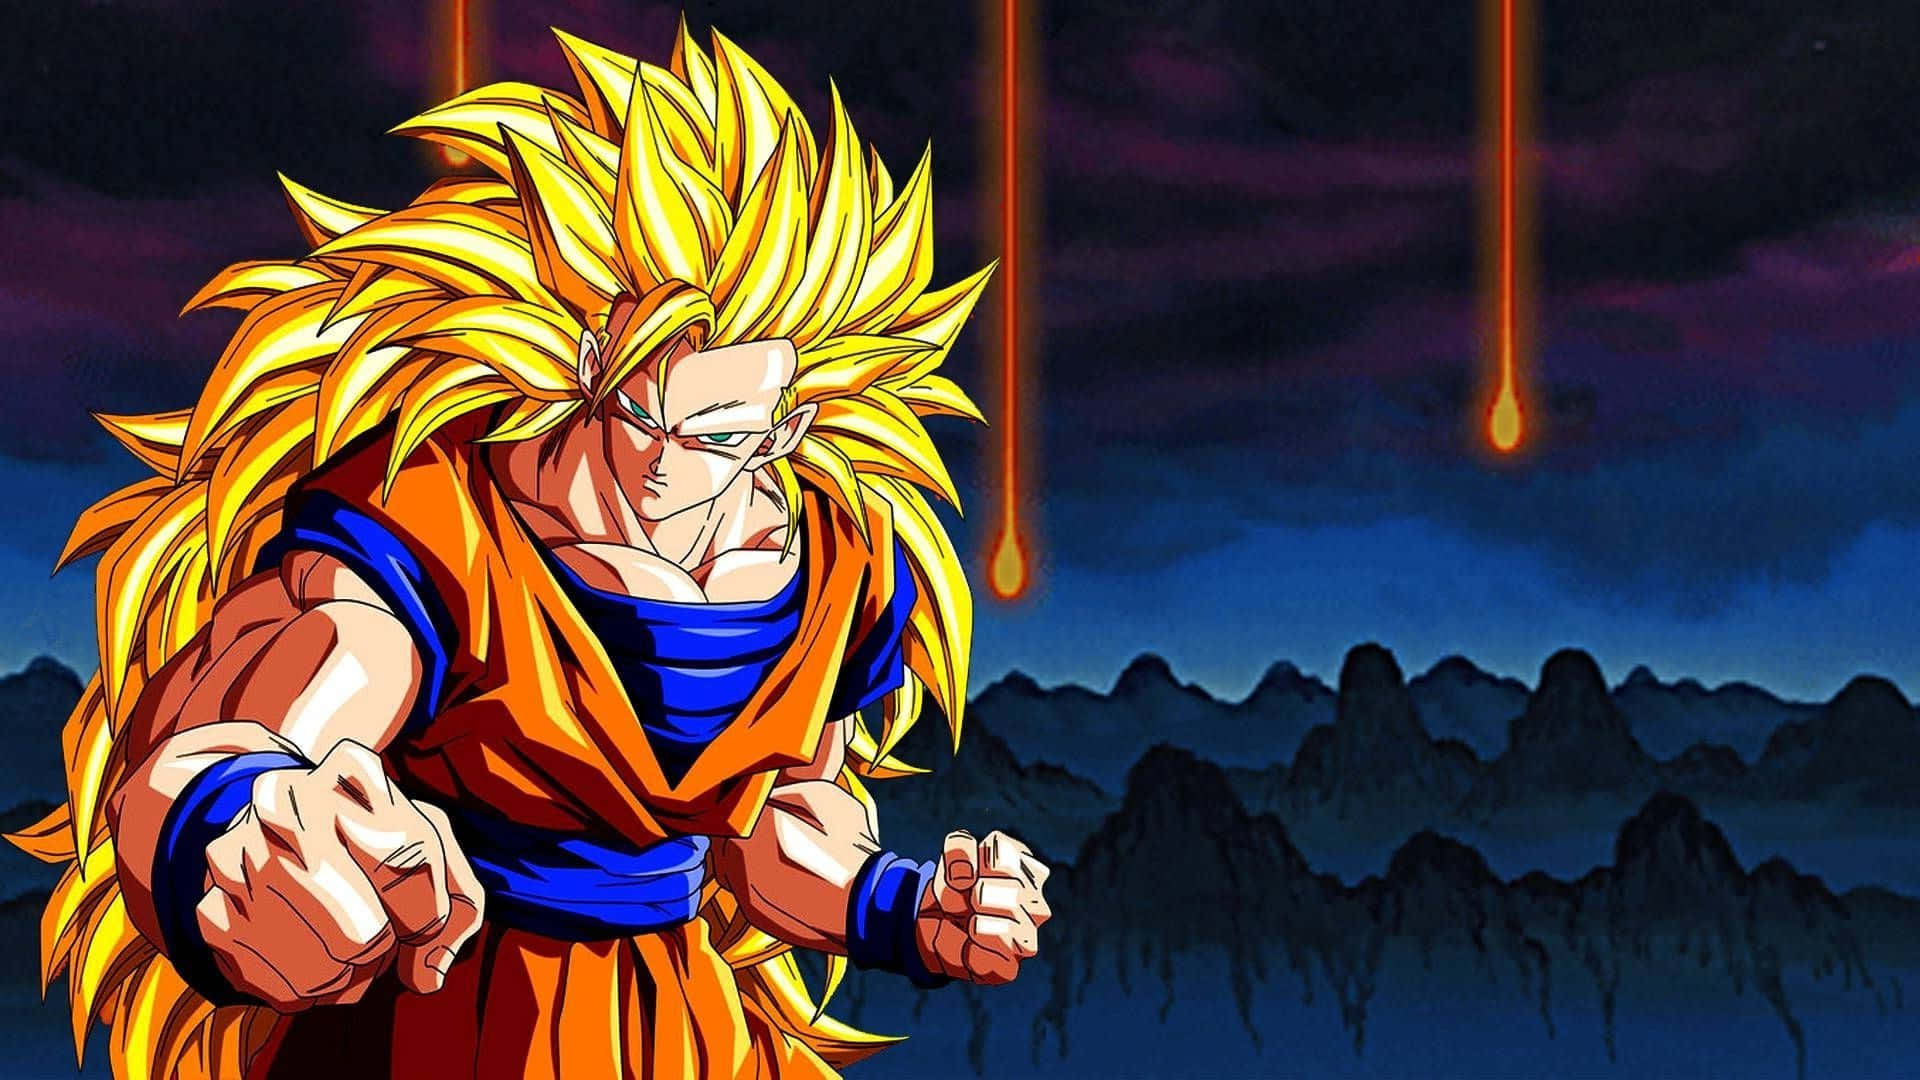 Super Saiyan 3 Goku unleashing powerful energy Wallpaper